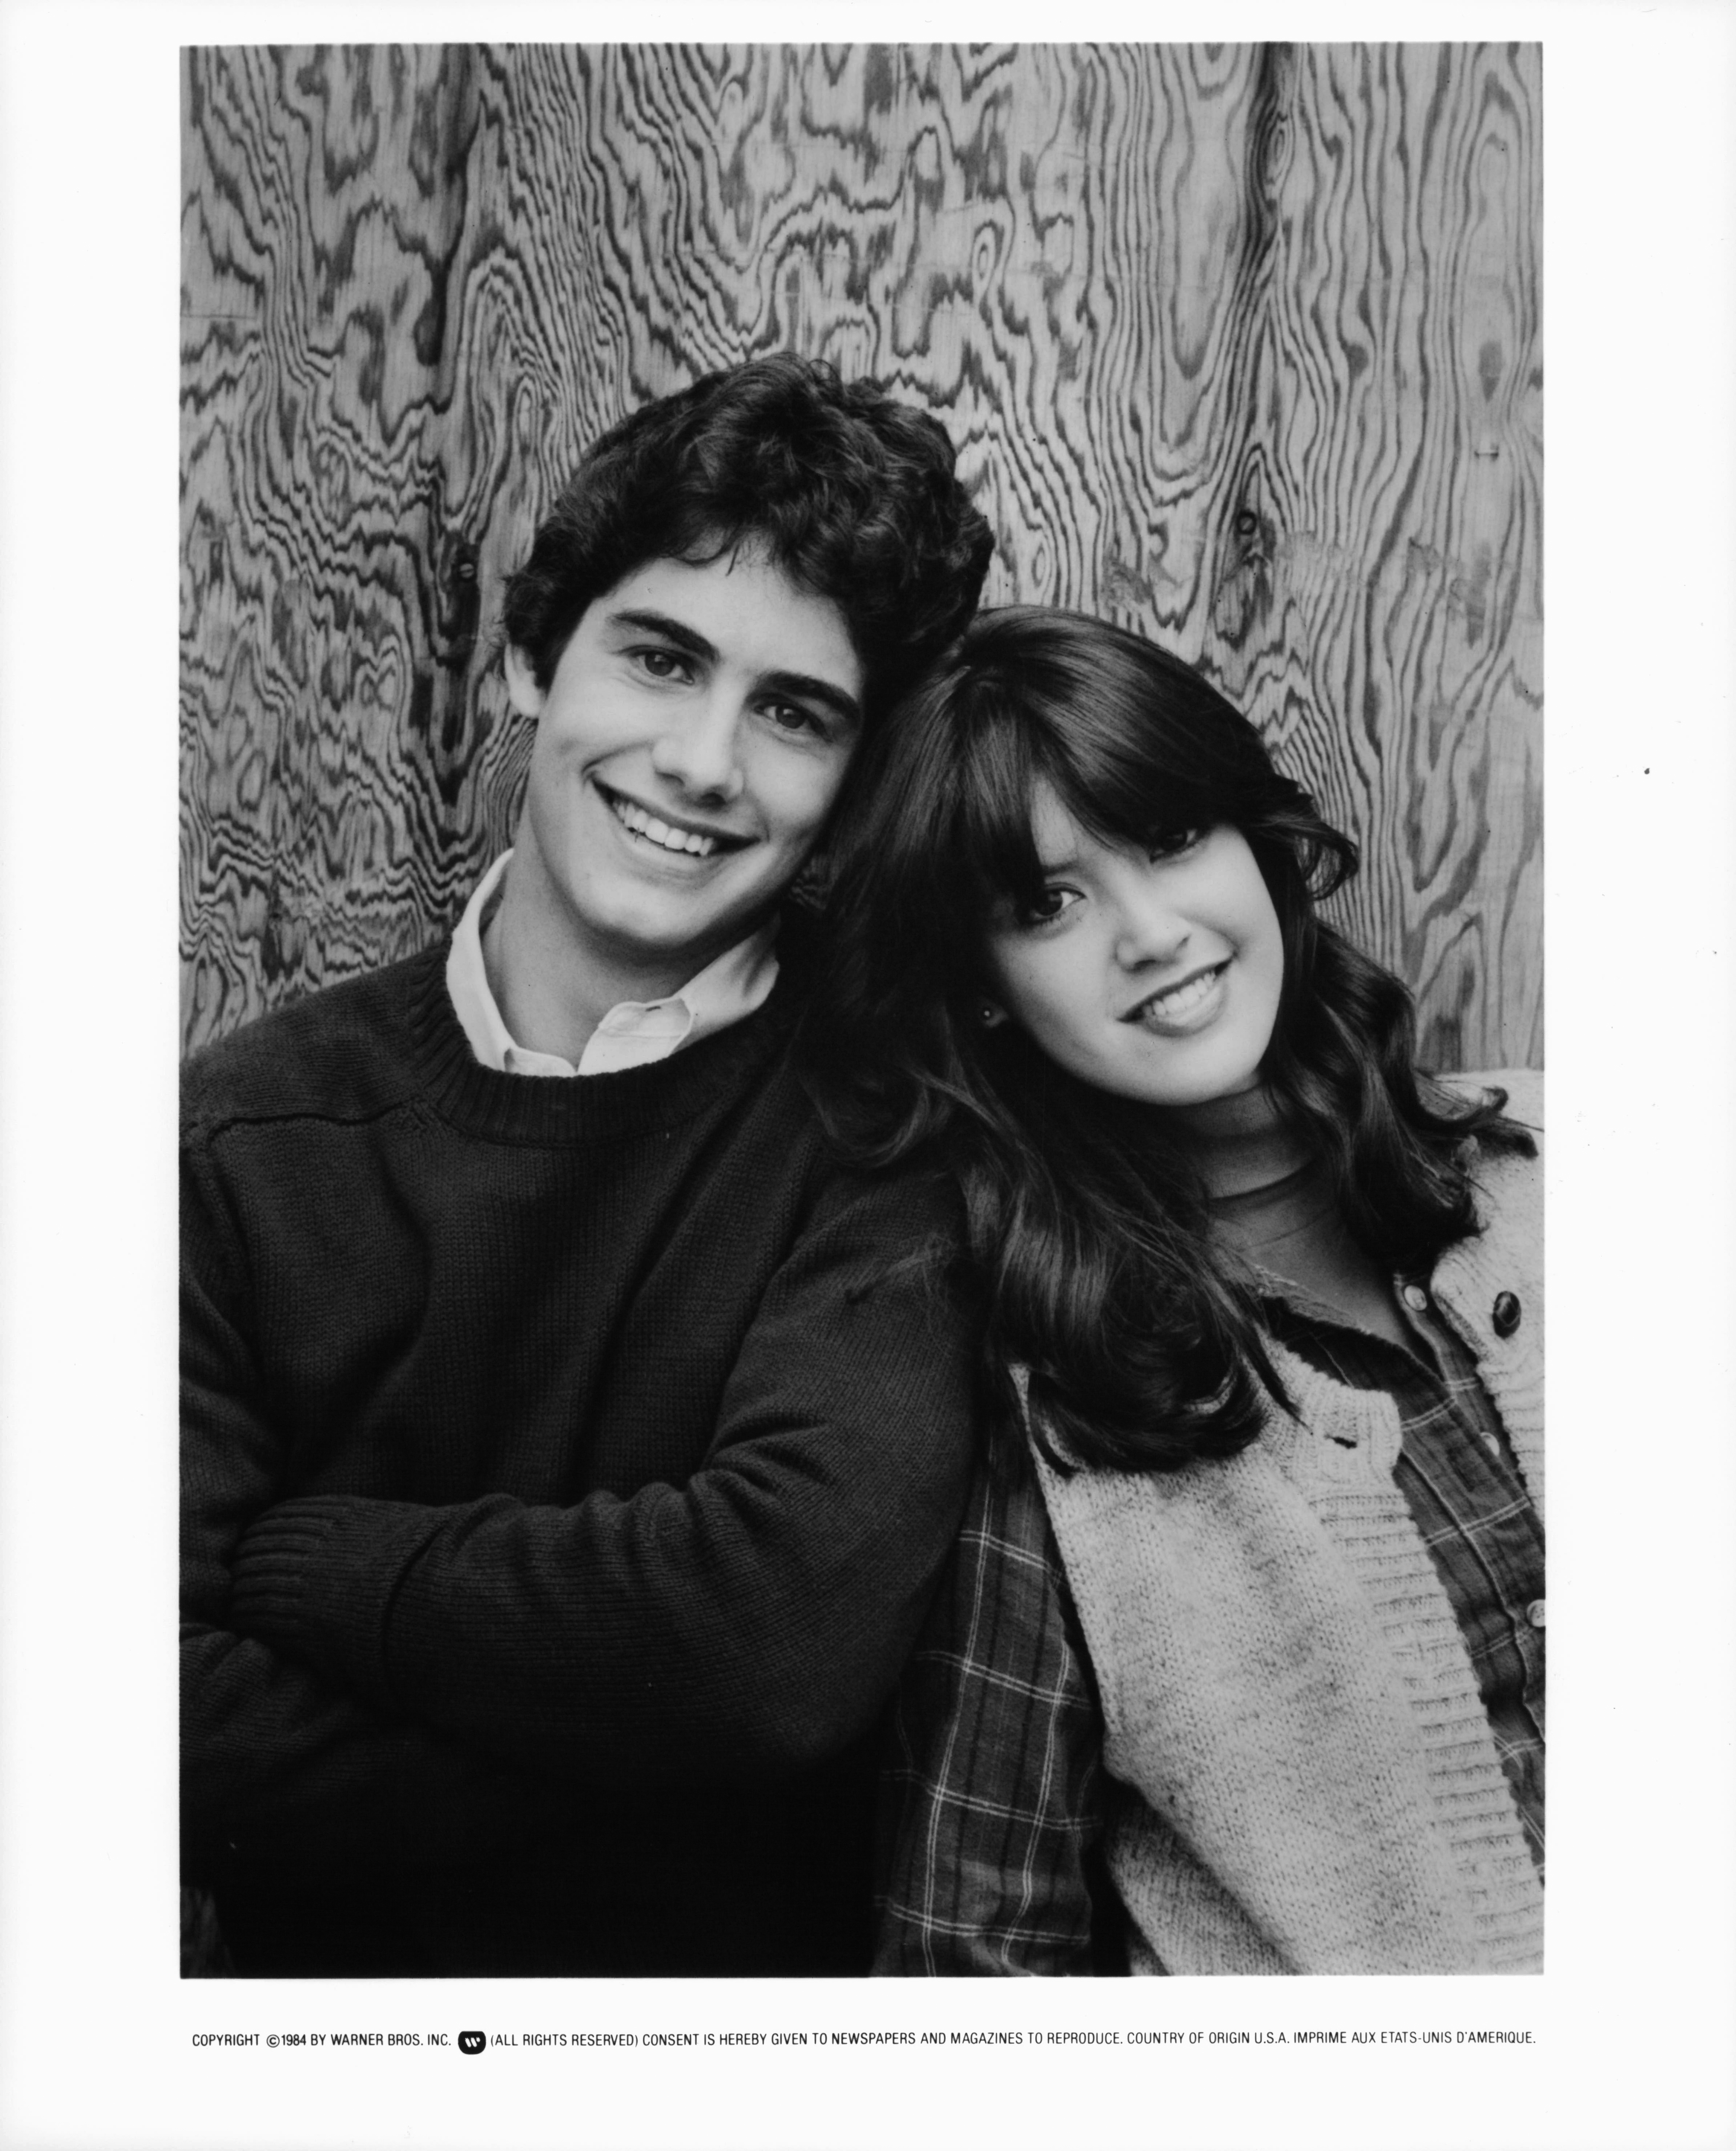 Still of Phoebe Cates and Zach Galligan in Gremlins (1984)